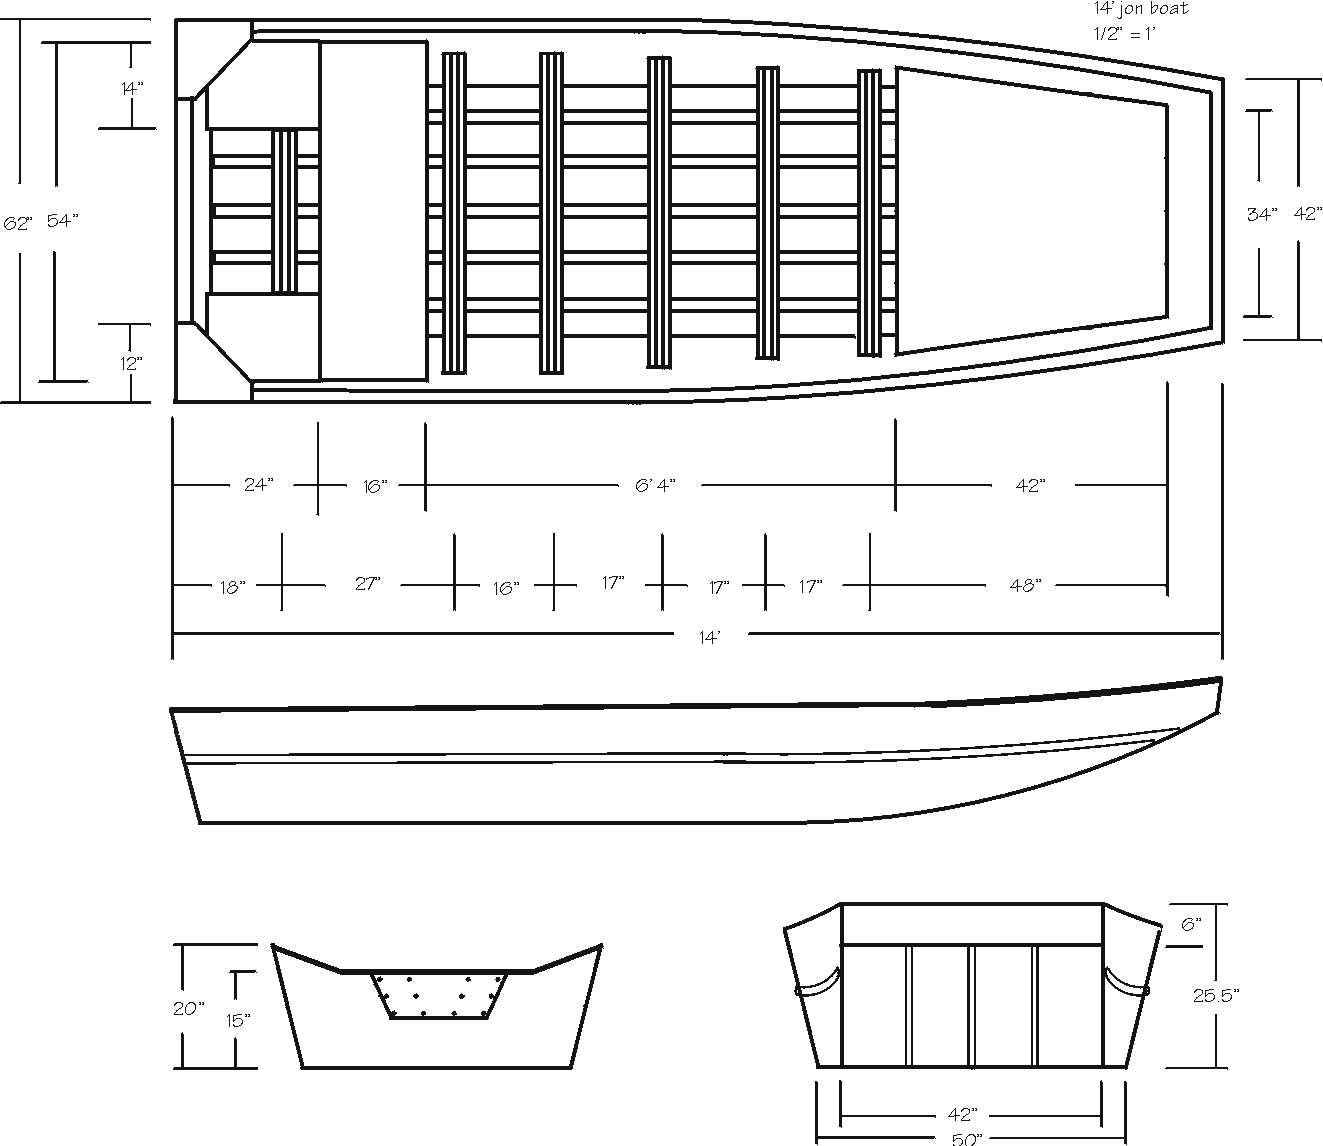 wood jon boat plans